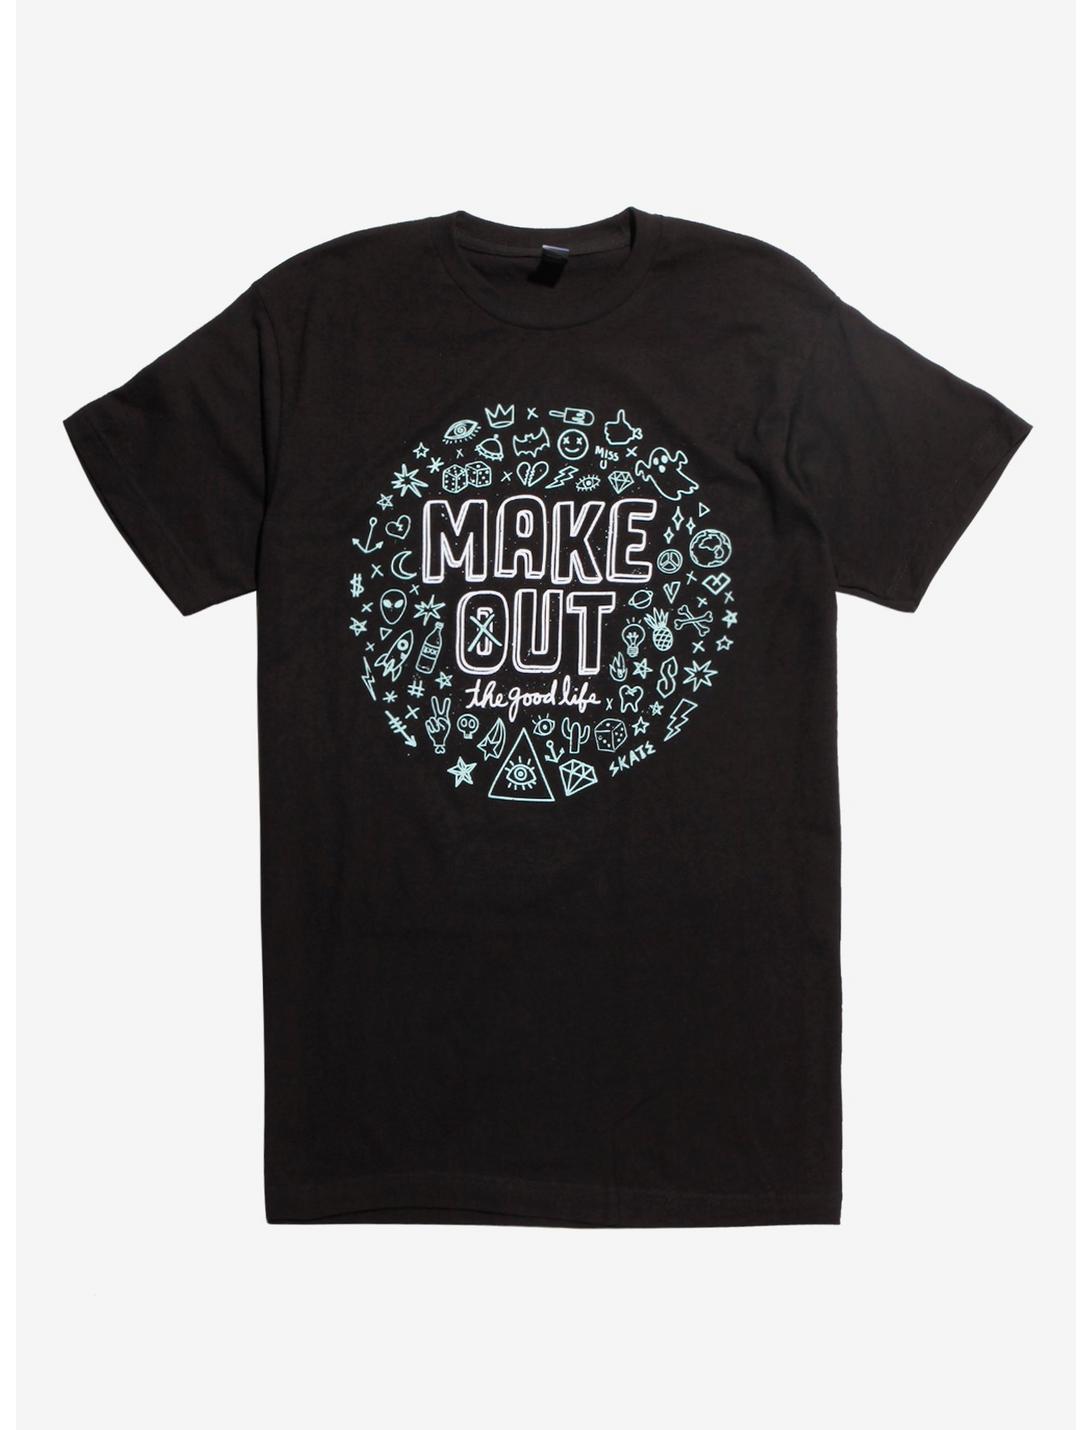 Makeout The Good Life T-Shirt, BLACK, hi-res